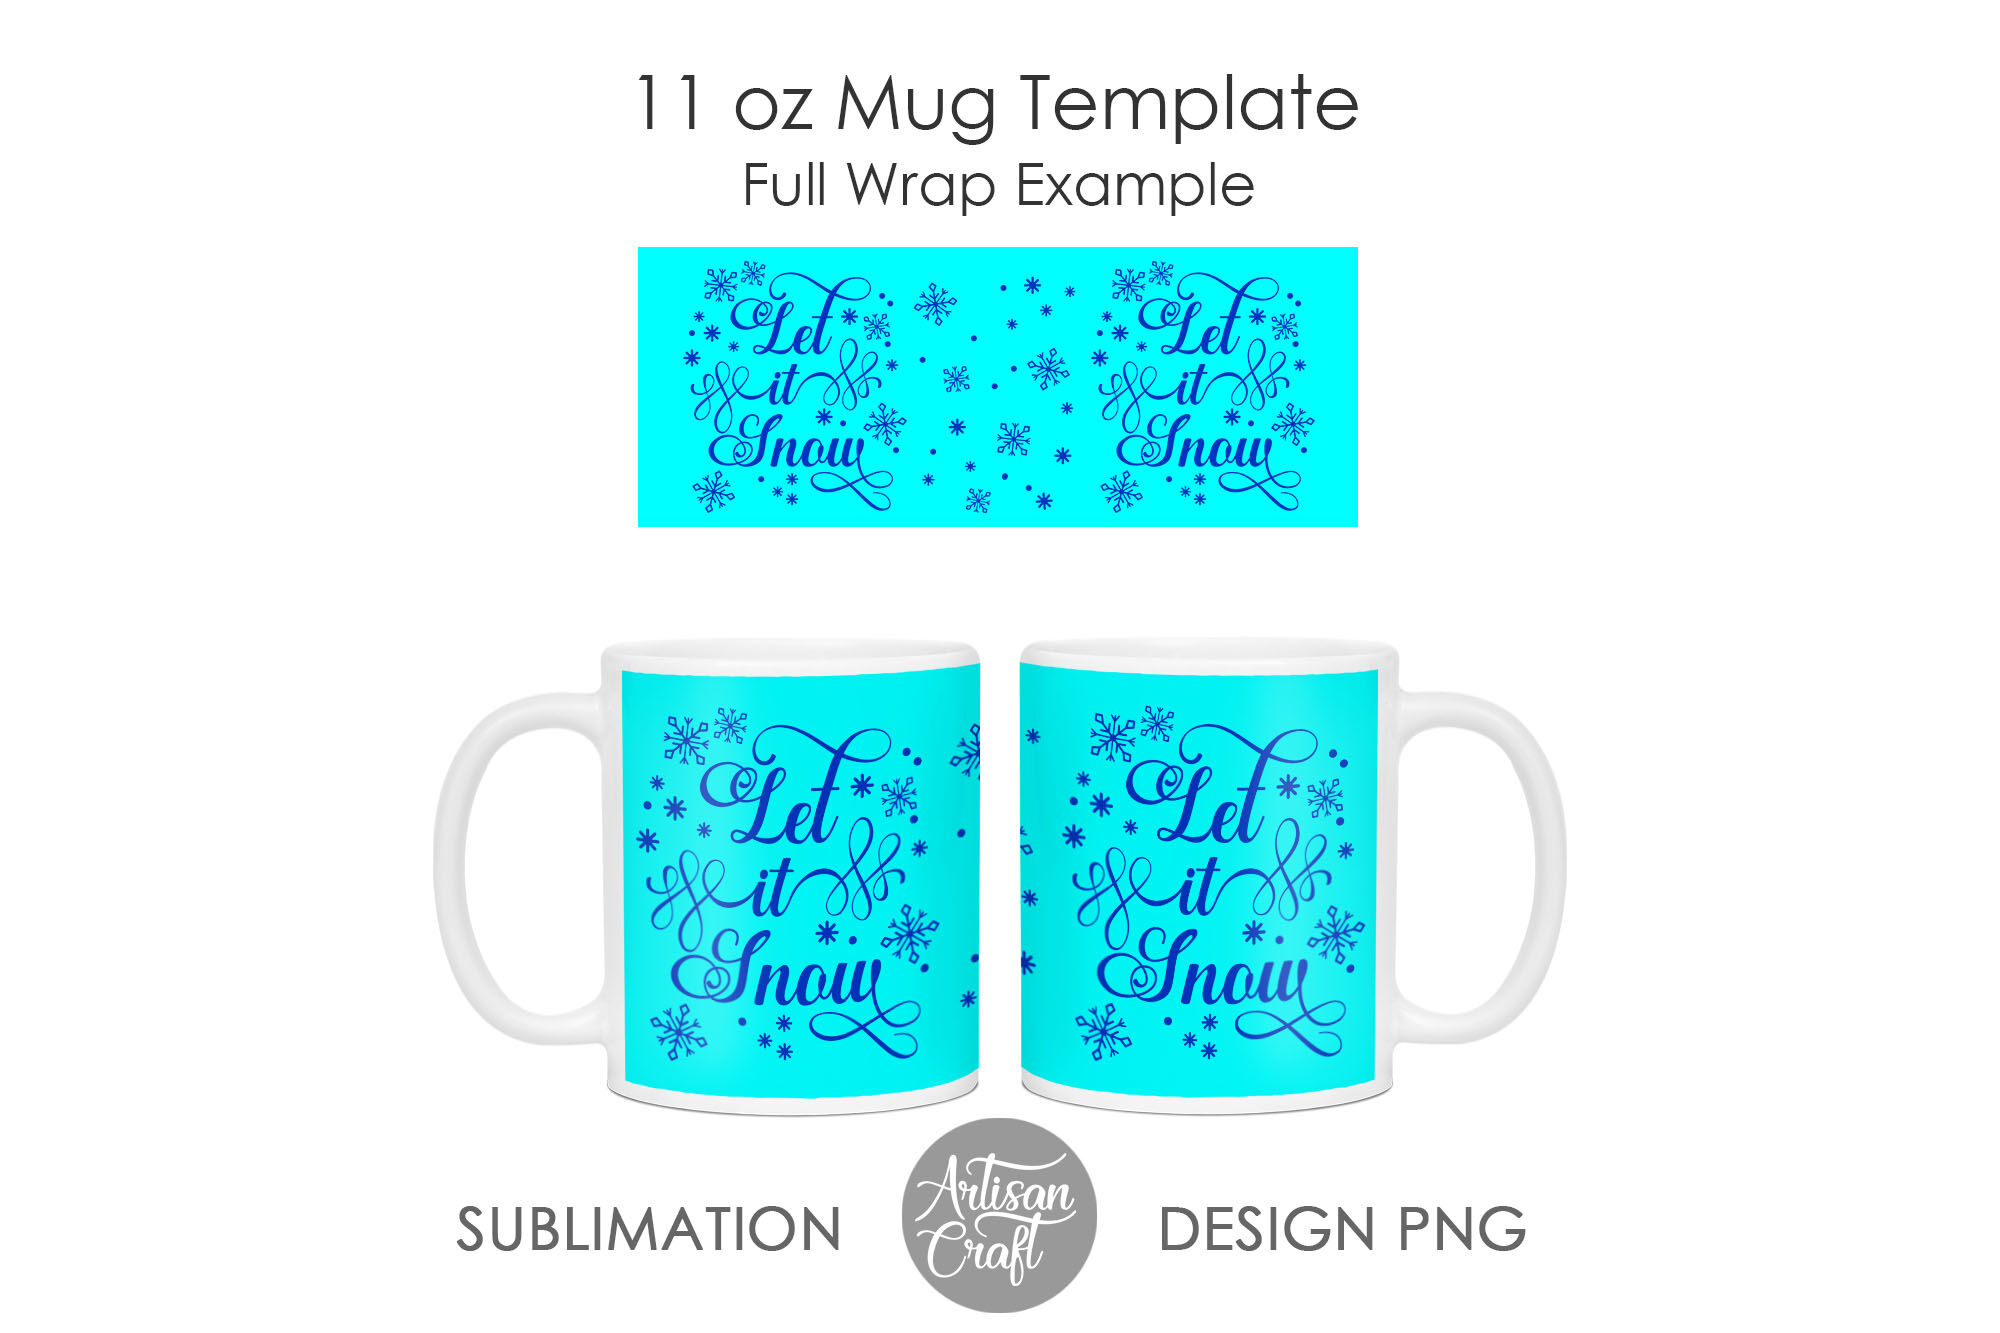 11 oz mug template 15 oz mug template By Artisan Craft SVG TheHungryJPEG